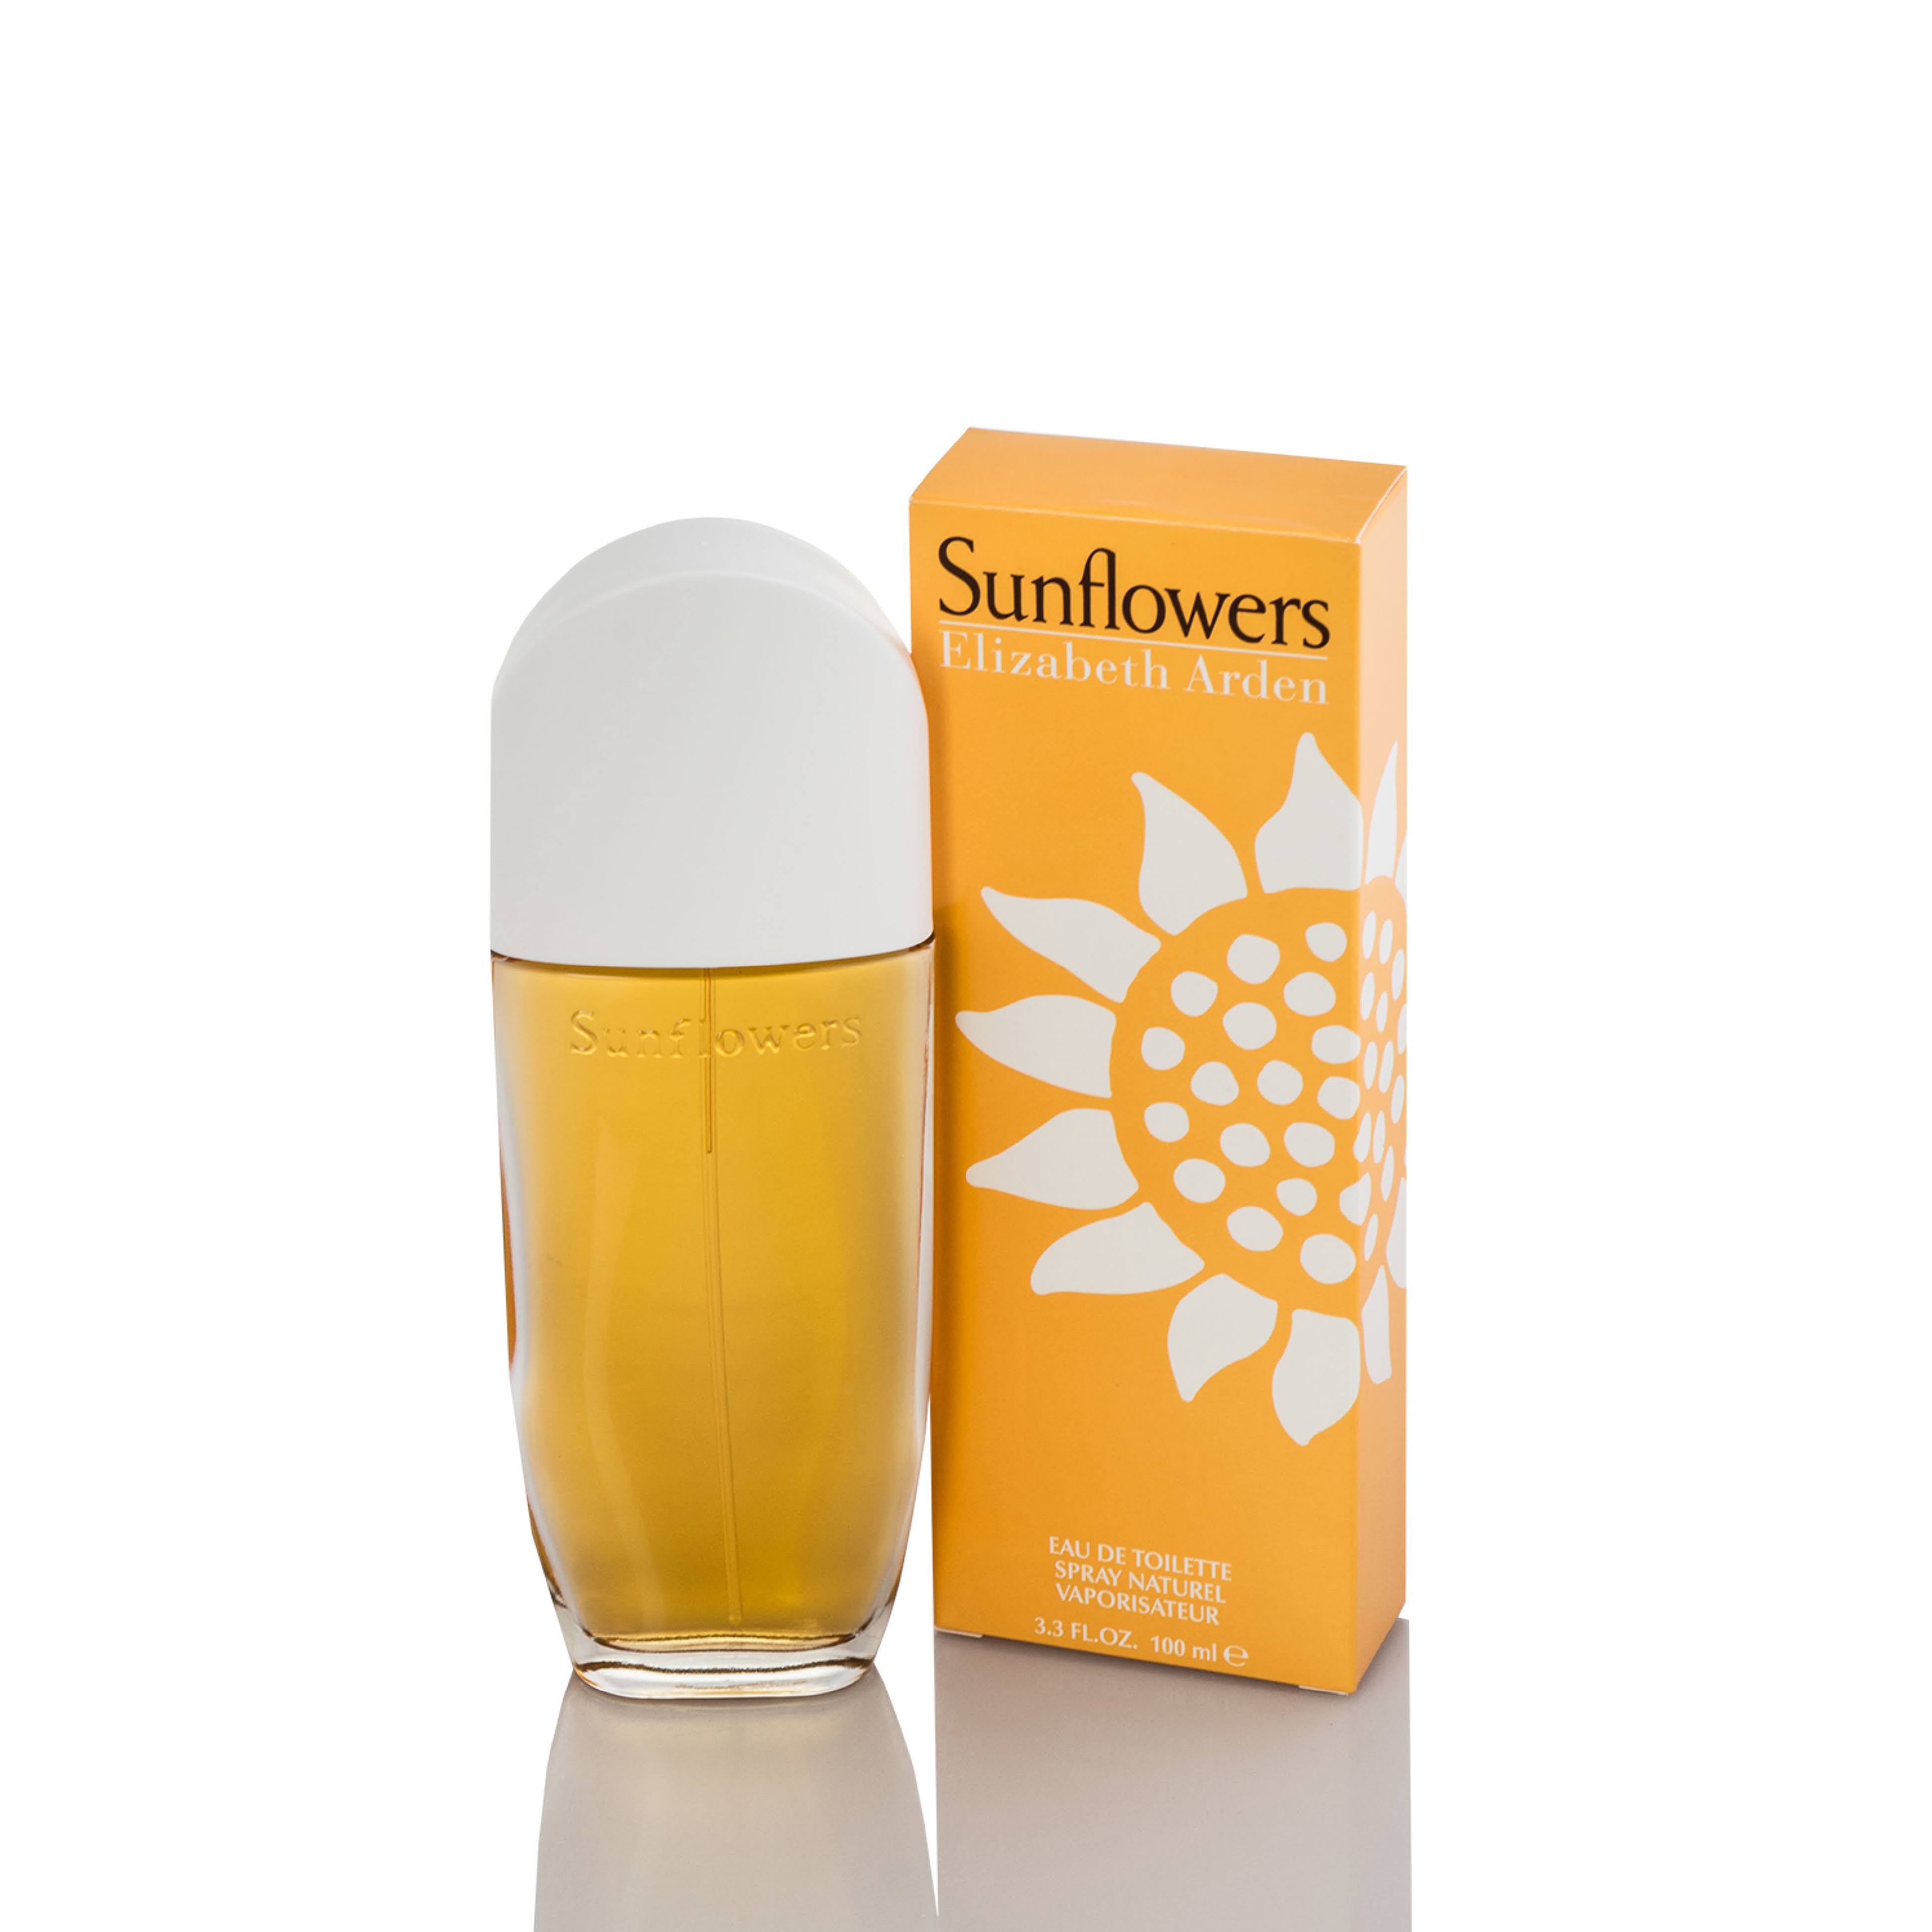 Elizabeth Arden Sunflowers Eau de Toilette Spray - 100ml